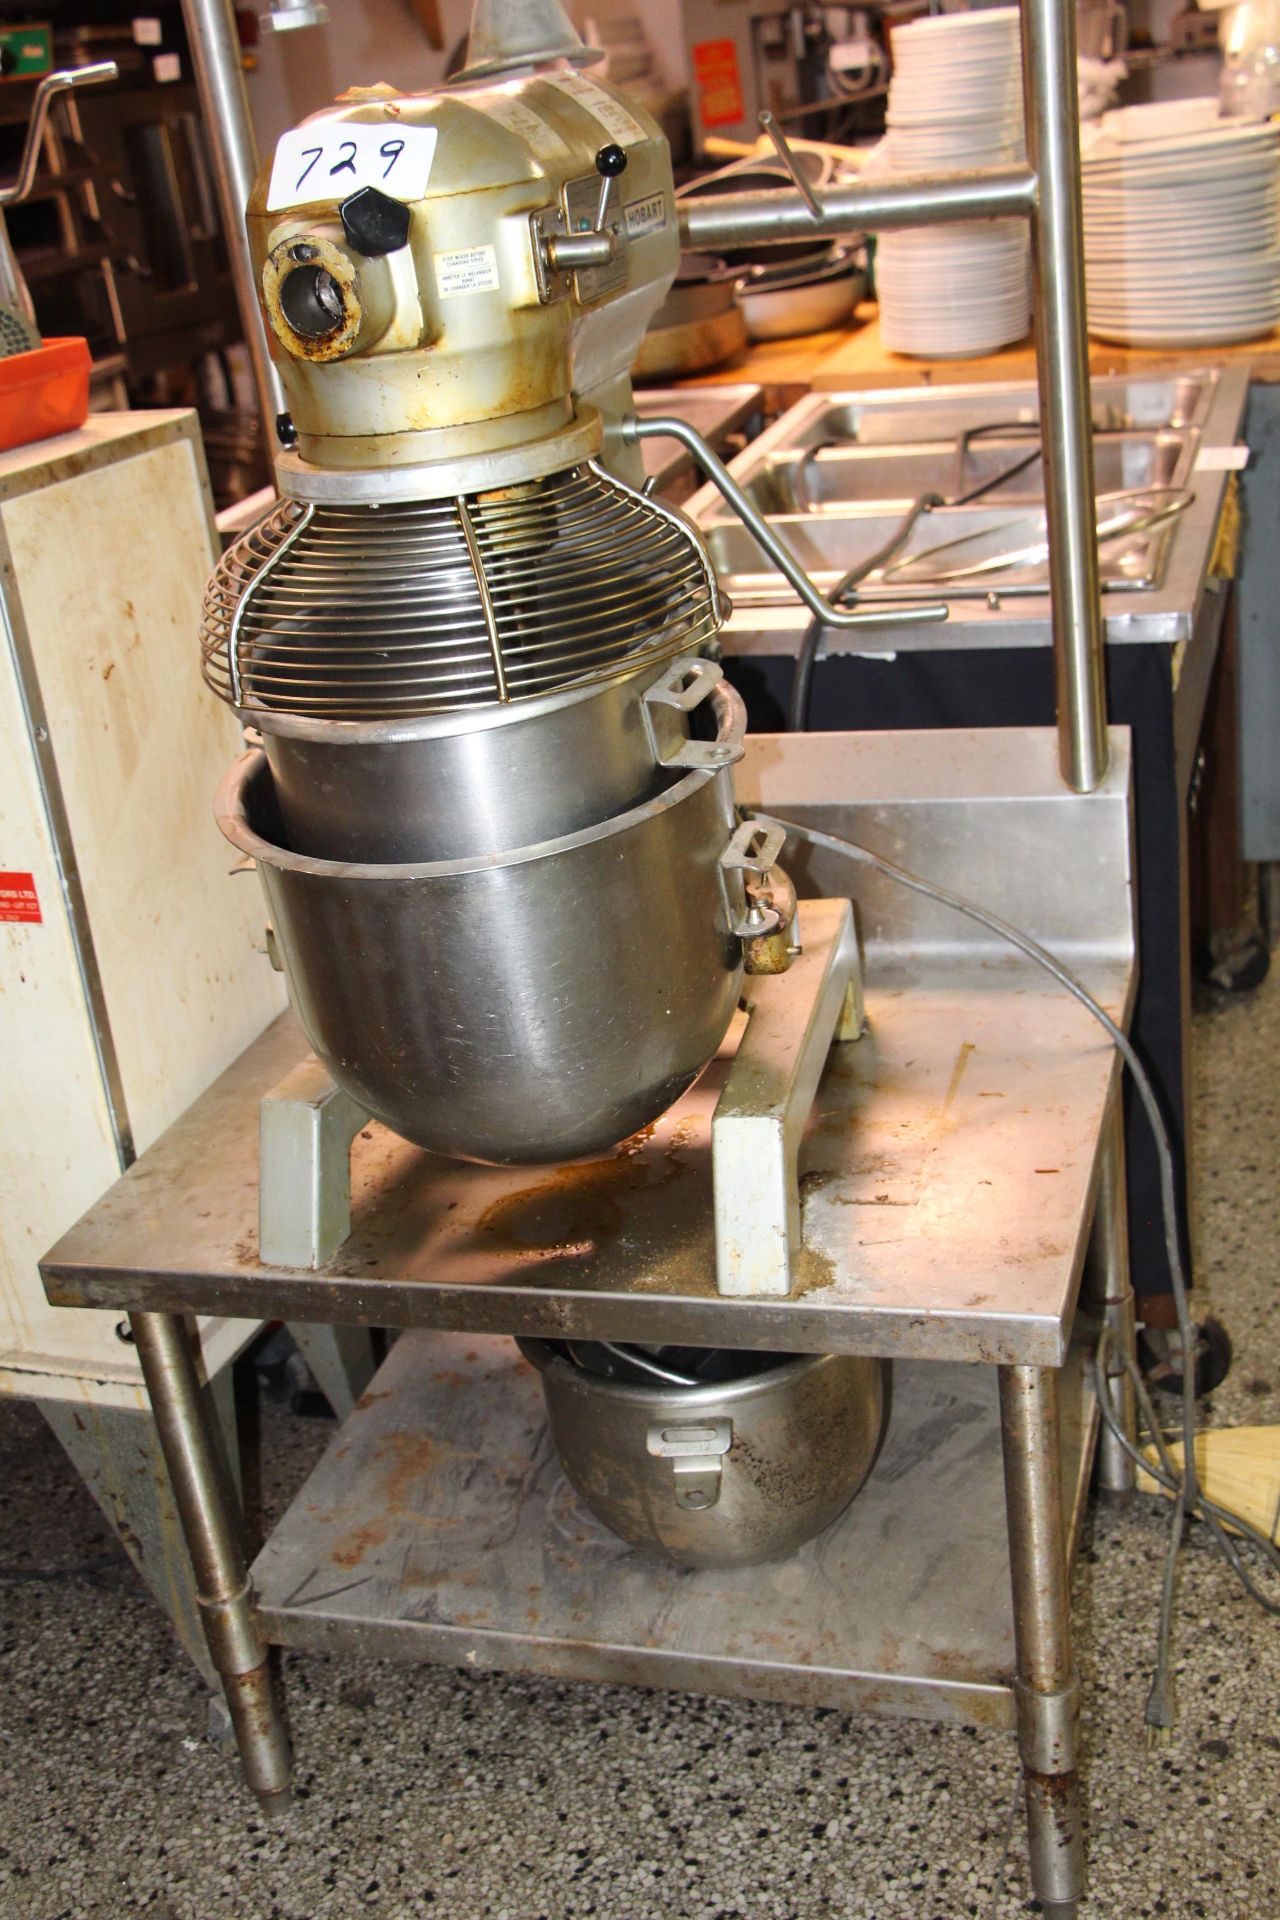 Hobart electric mixer